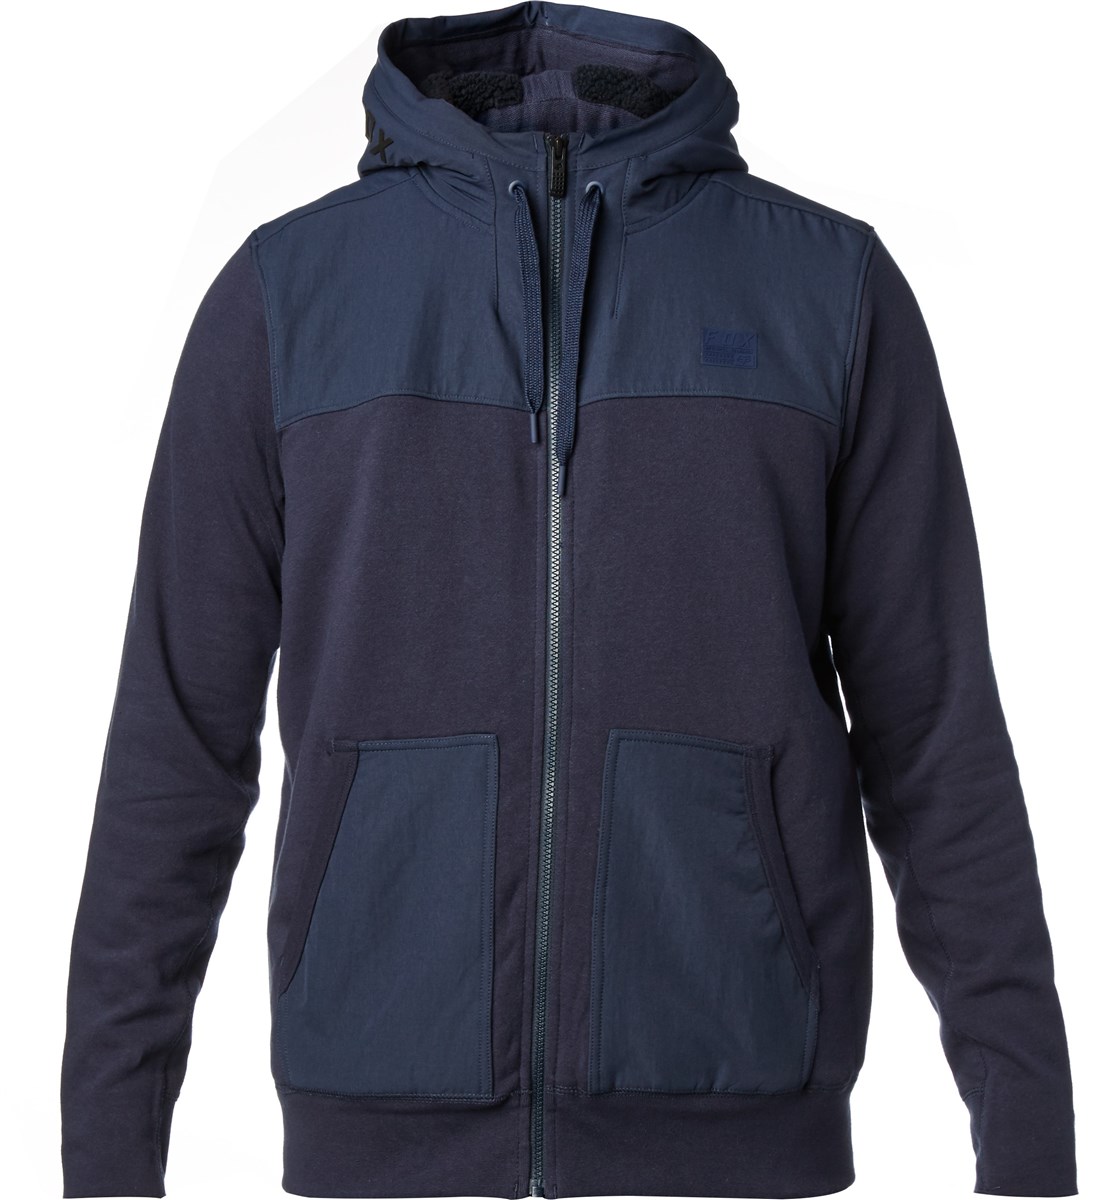 Fox Clothing Outbound Sherpa Zip Fleece AW17